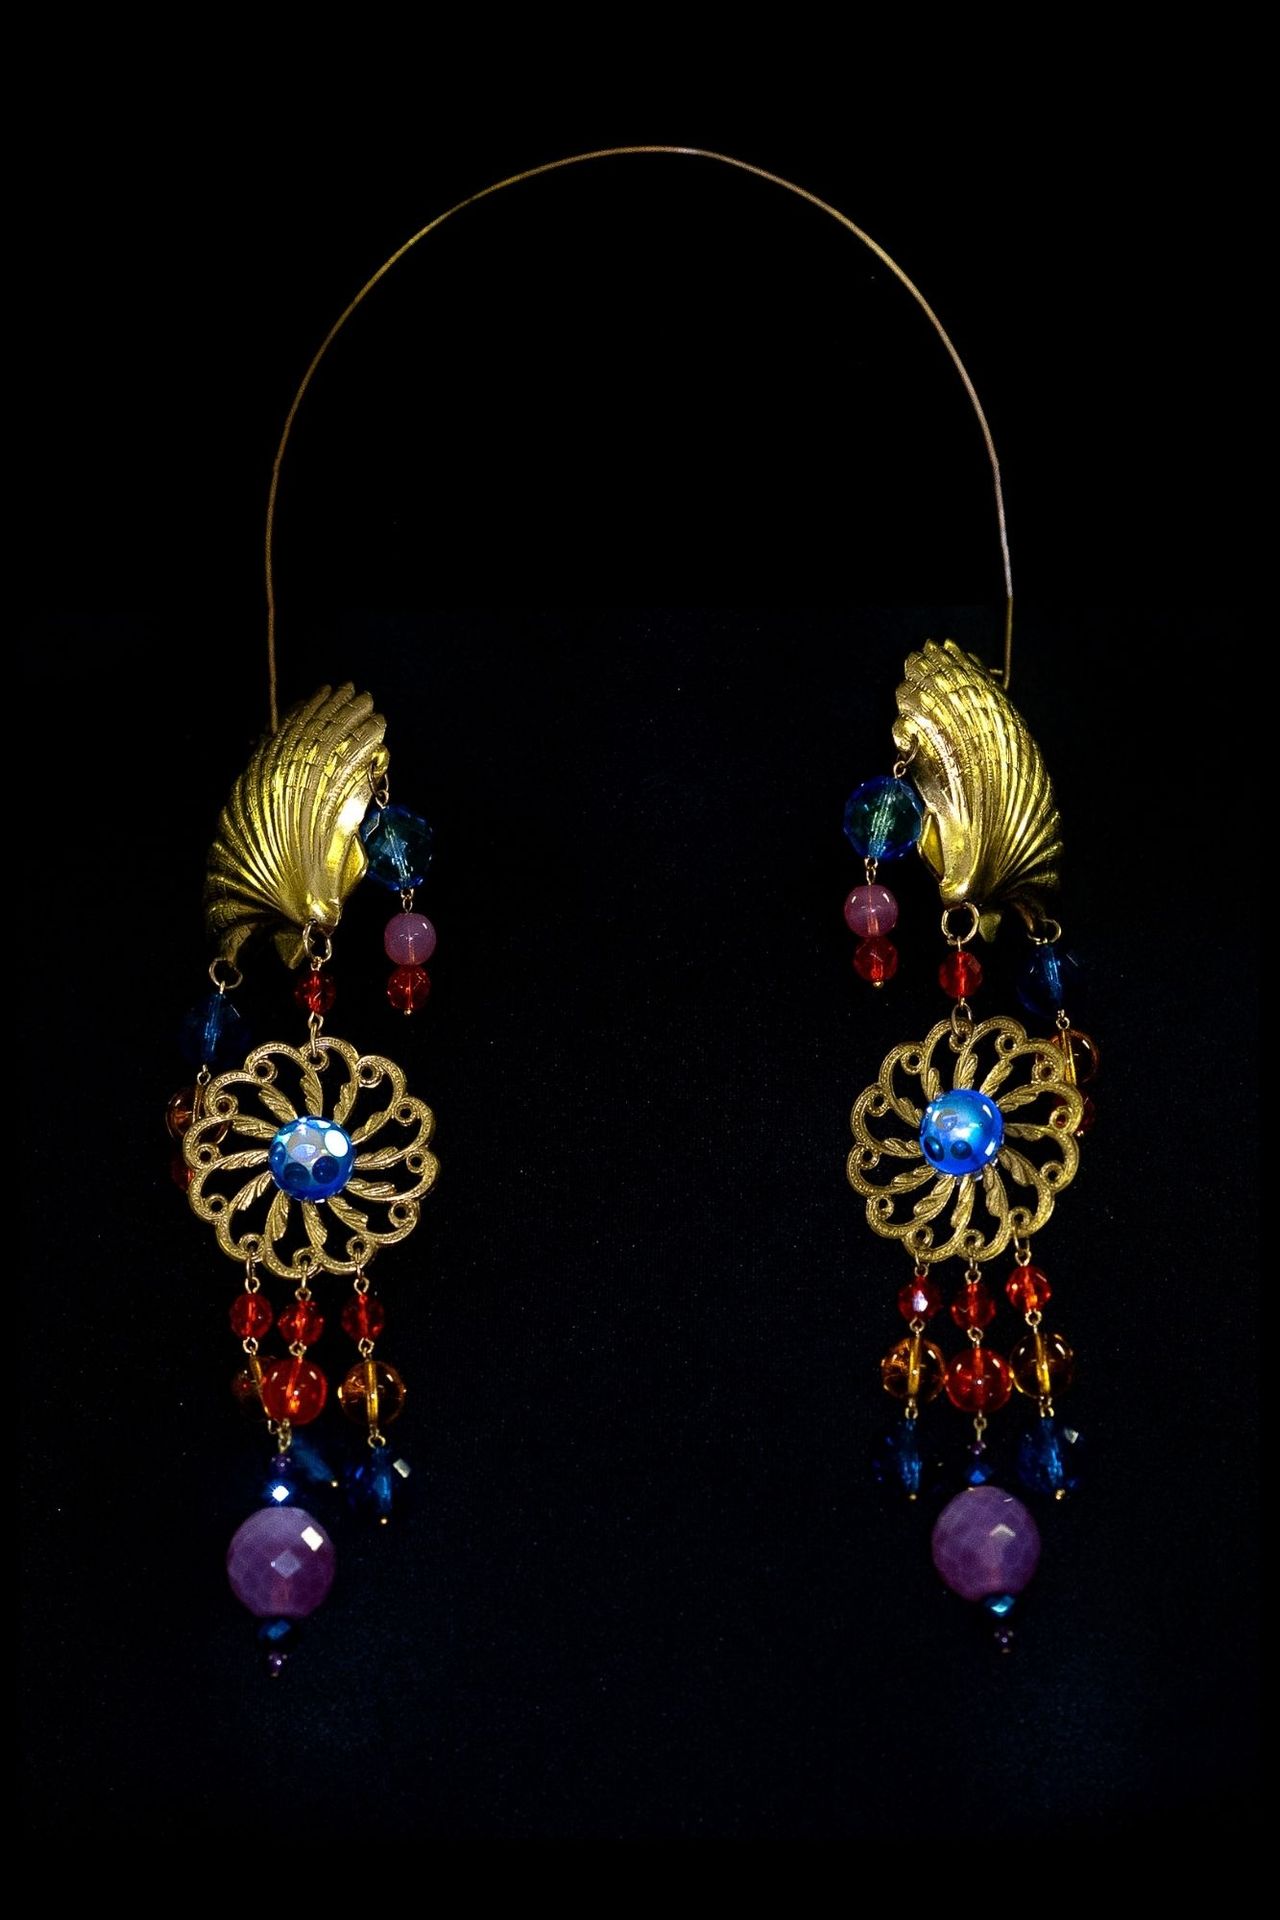 Gerlinde HOBEL 头饰 "贝壳" - 镀金金属头饰，带波西米亚水晶珠子

镀金金属头饰与波西米亚水晶珠。